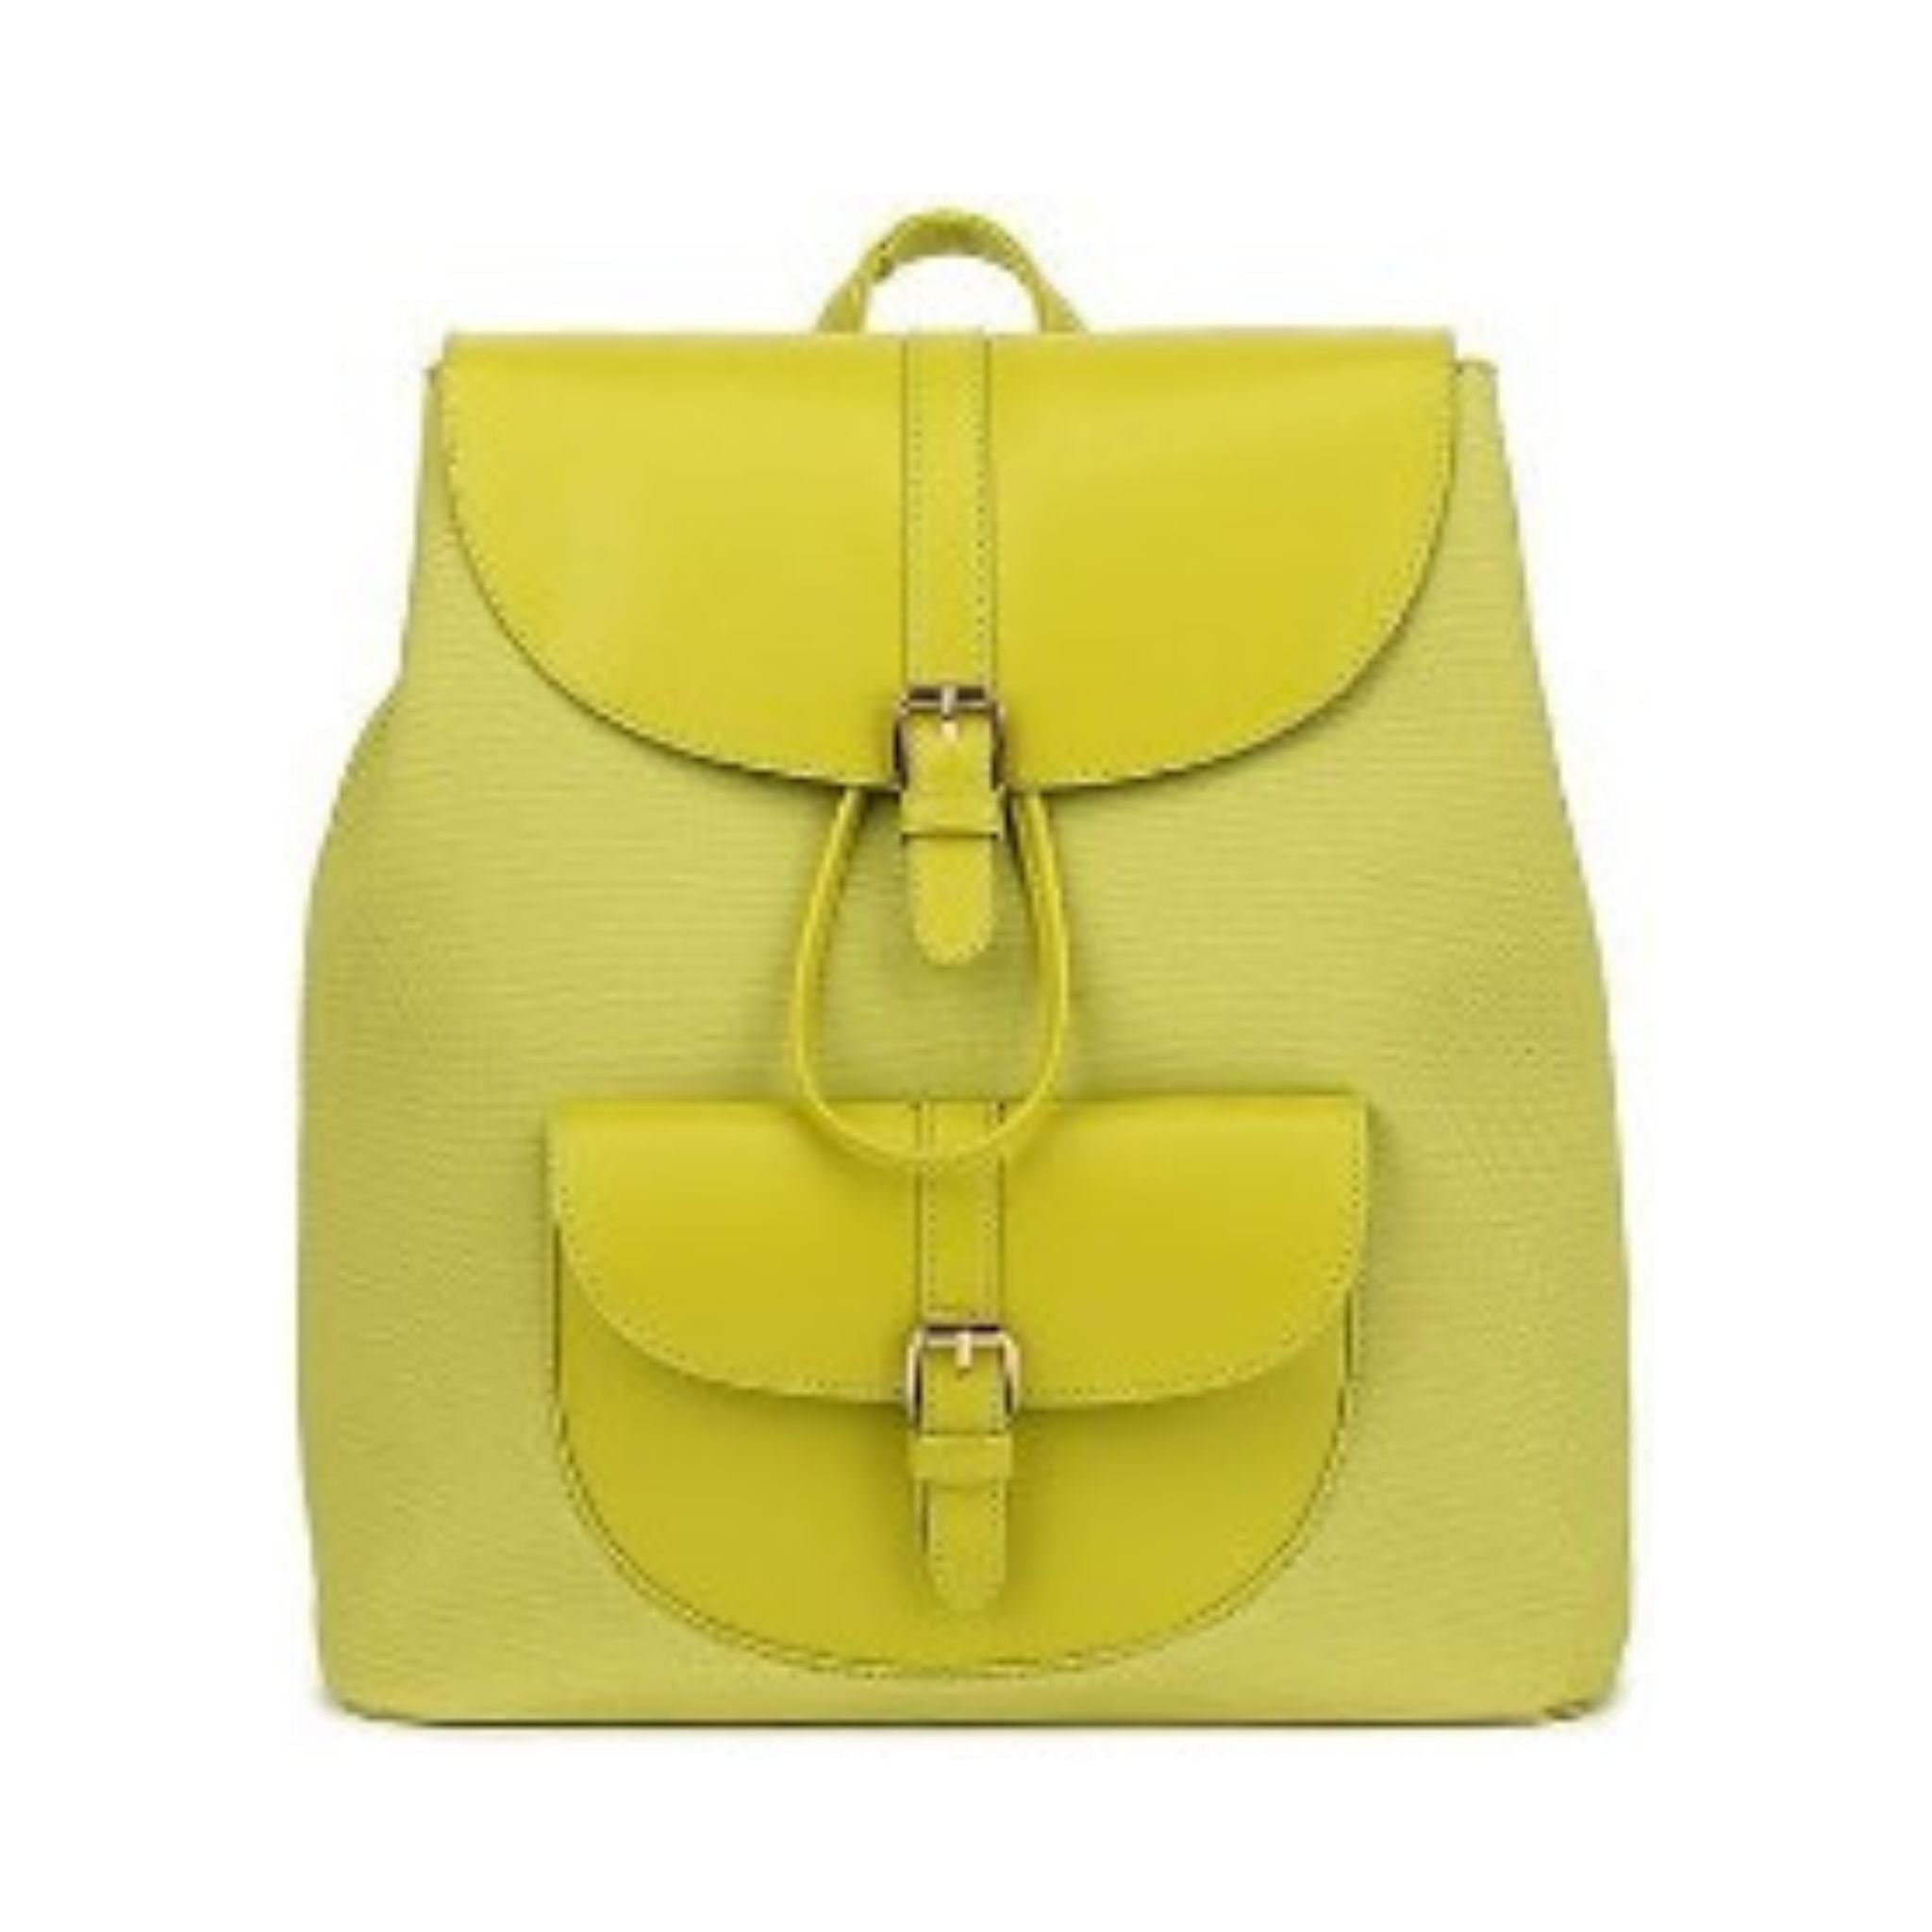 KS2300 Bosalina Fashion Backpack